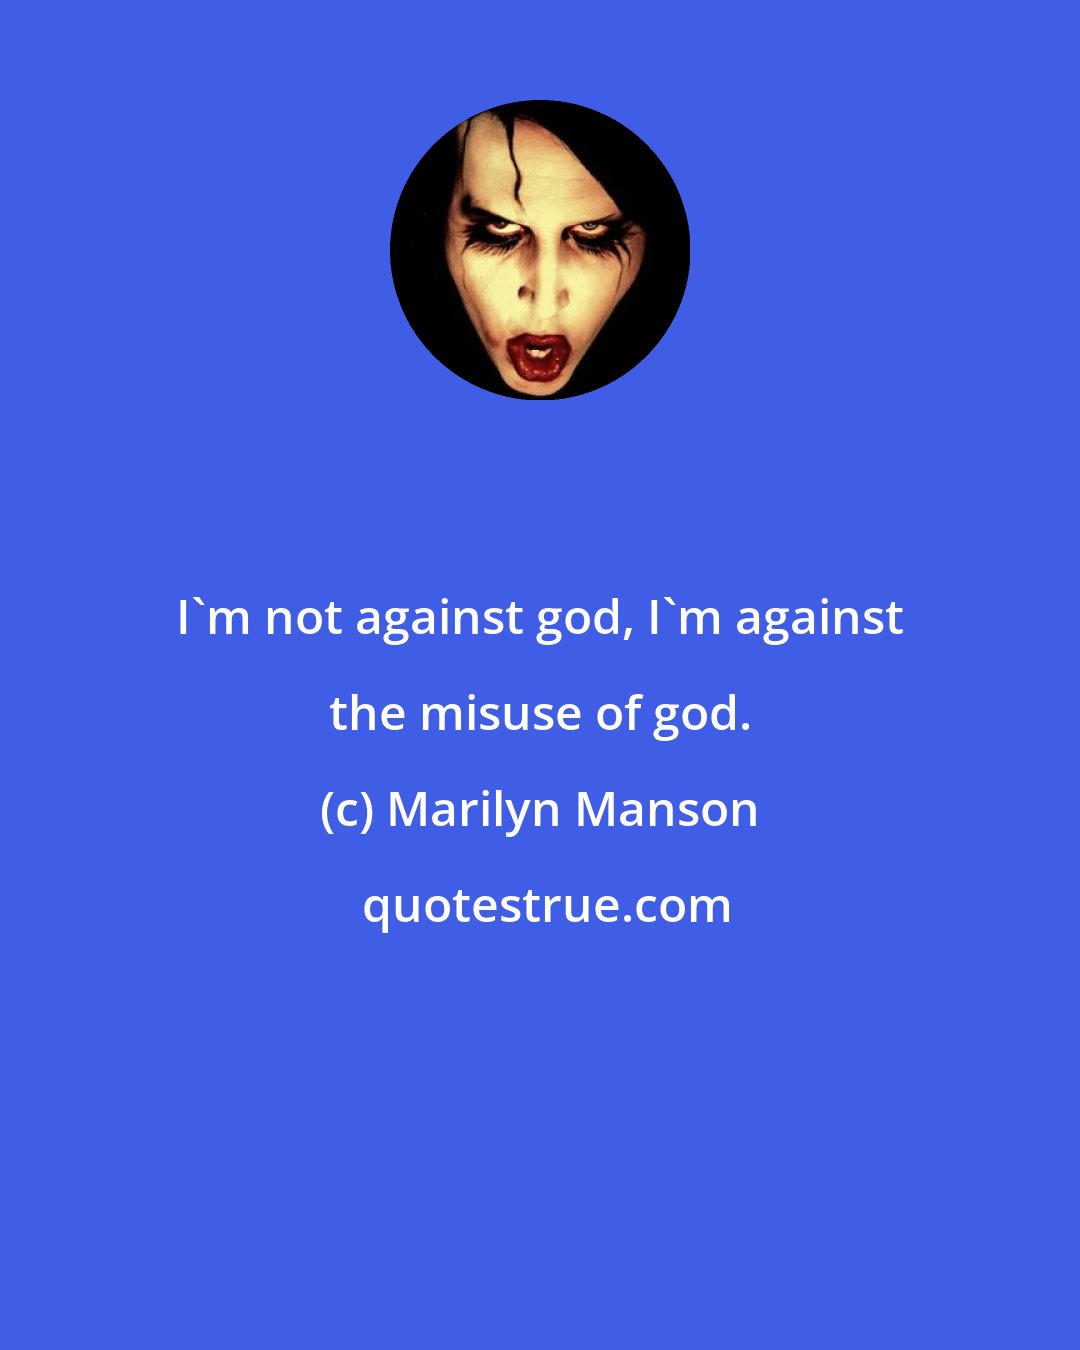 Marilyn Manson: I'm not against god, I'm against the misuse of god.